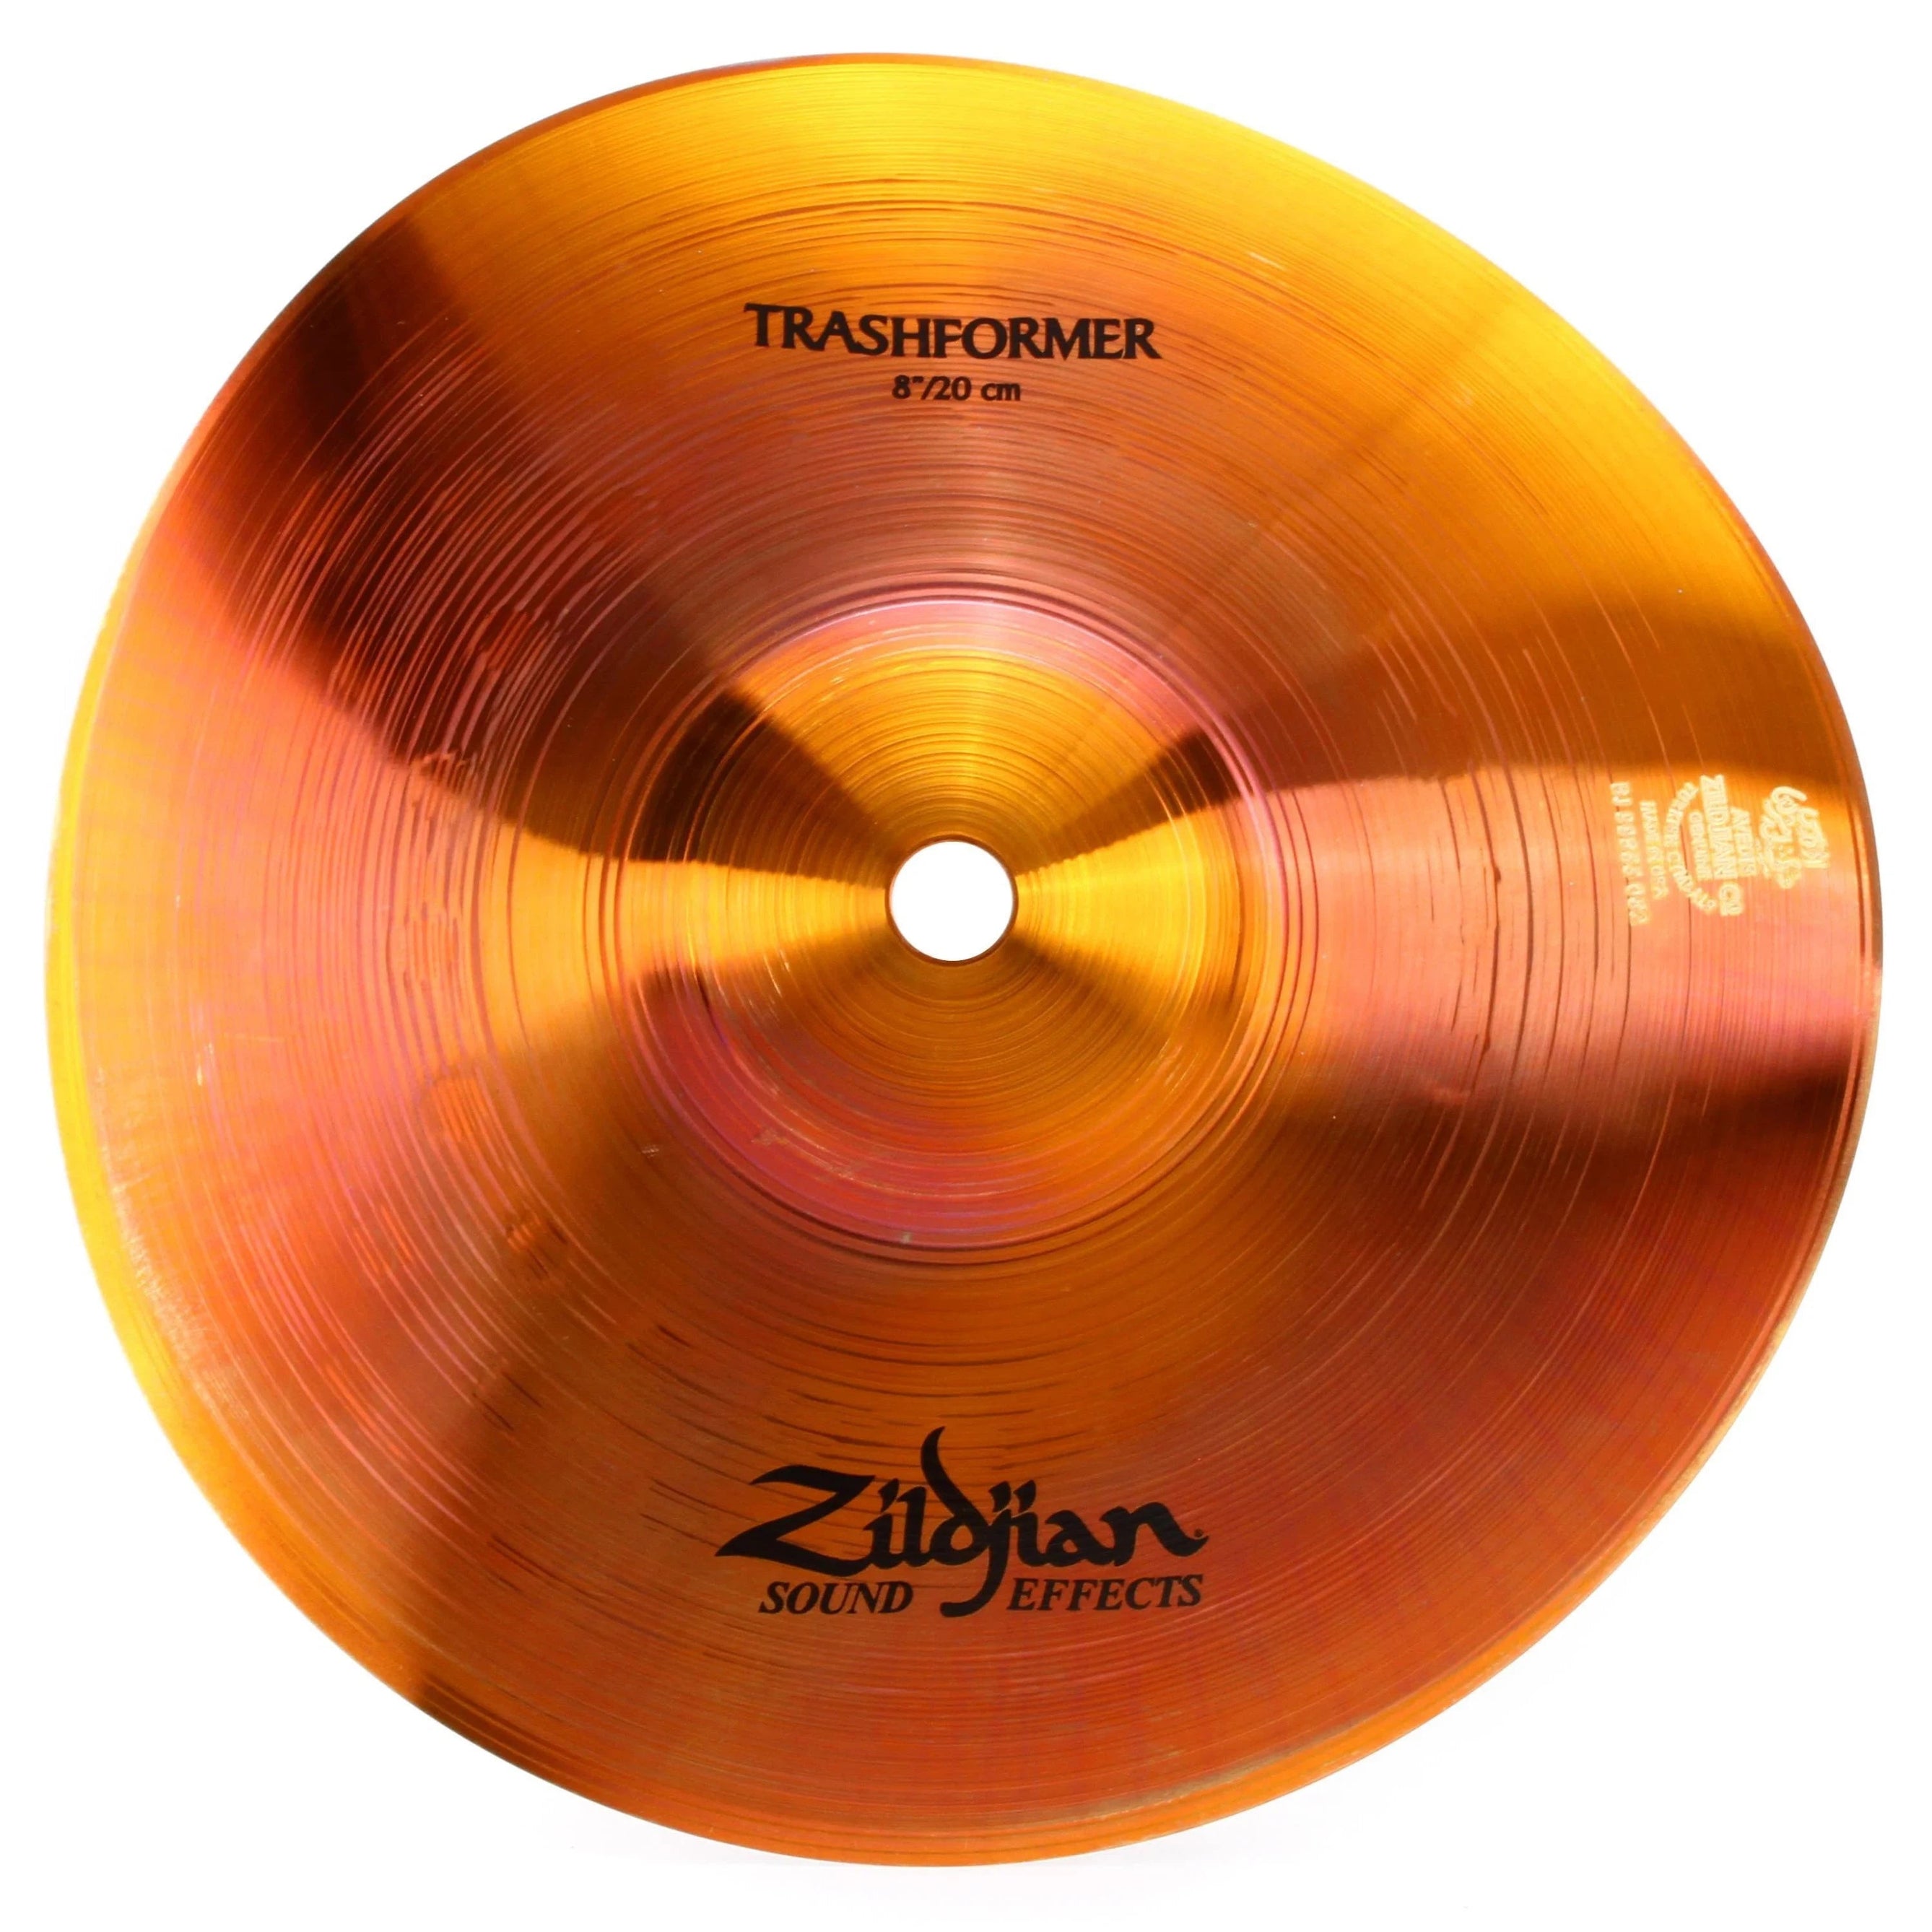 FX Cymbal Zildjian FX Trashformers-Mai Nguyên Music